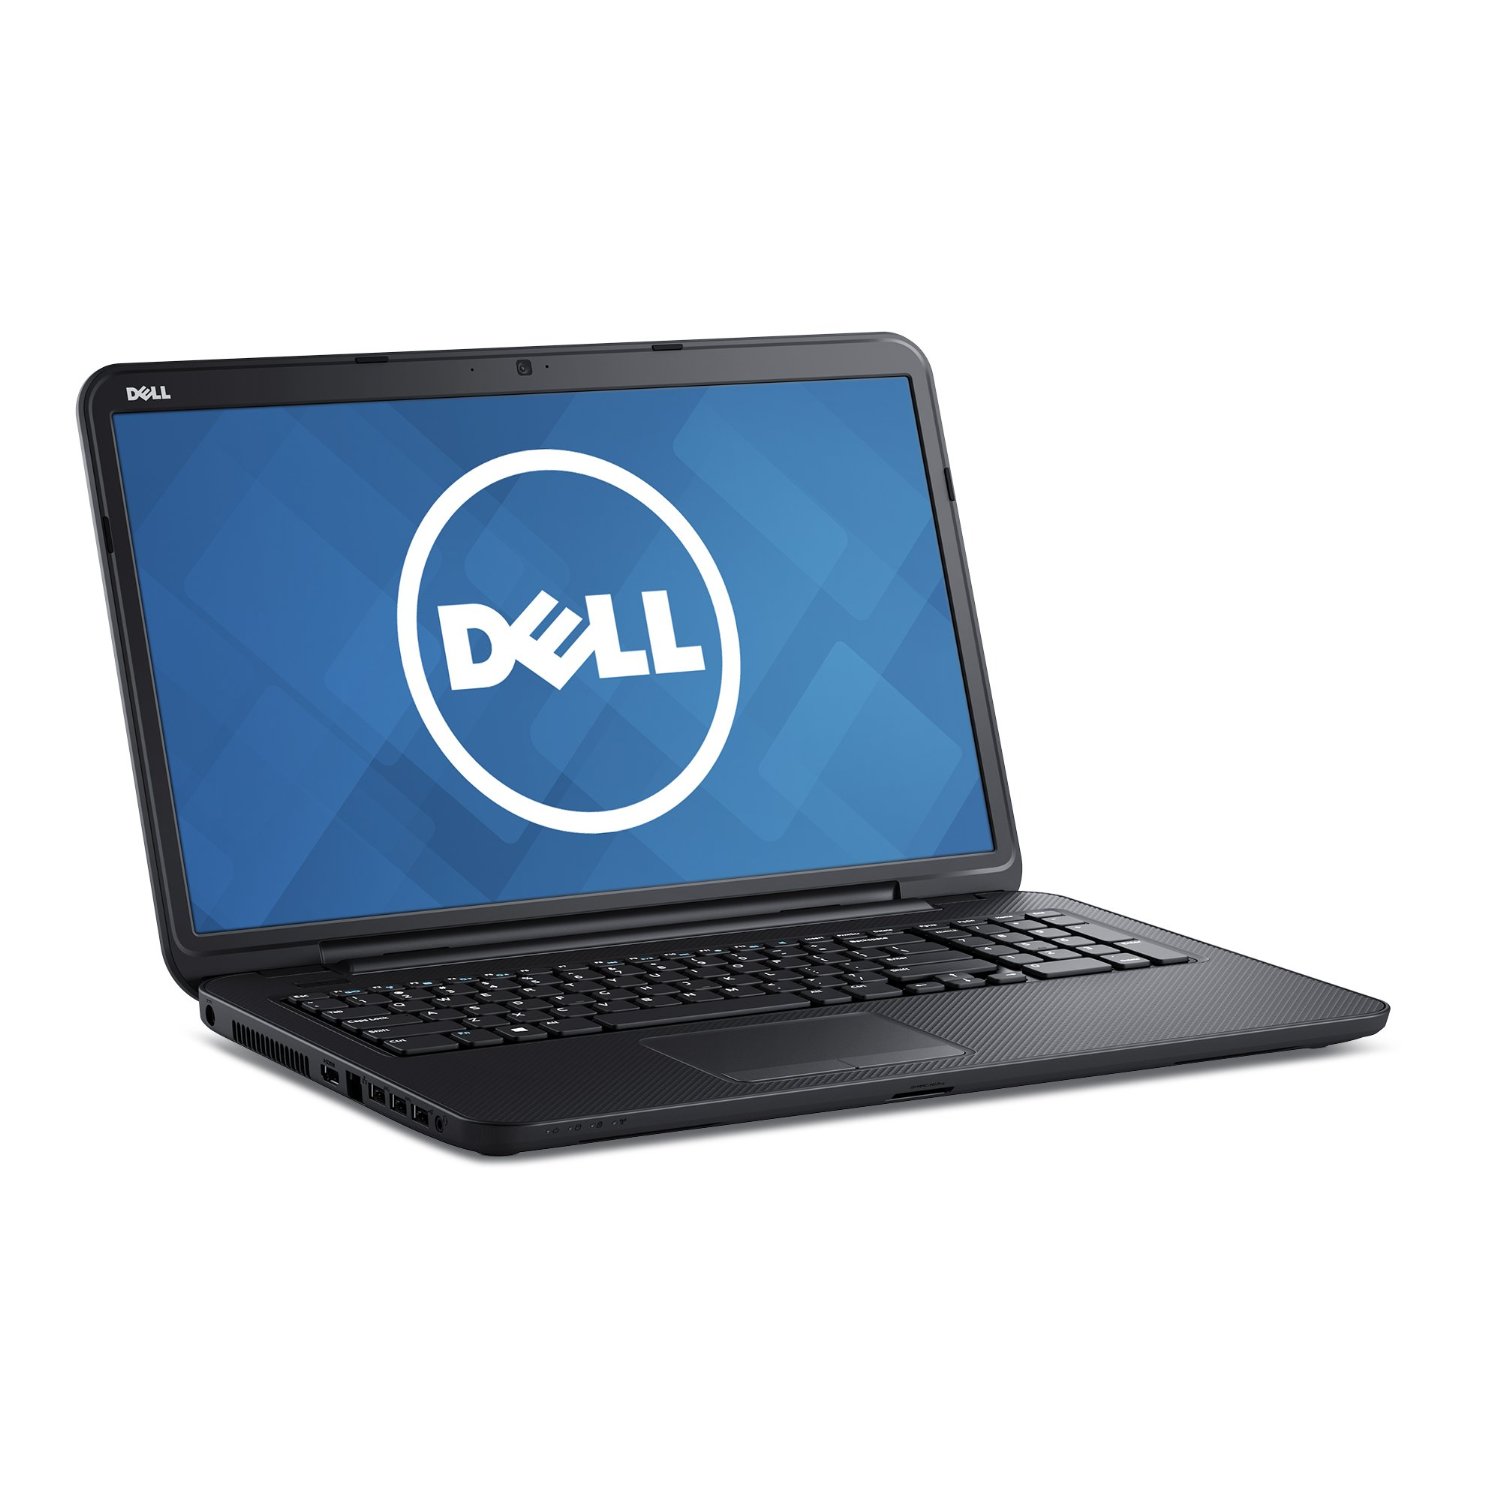 Dell Inspiron 17.3-Inch Laptop (i17RV-5457BLK)